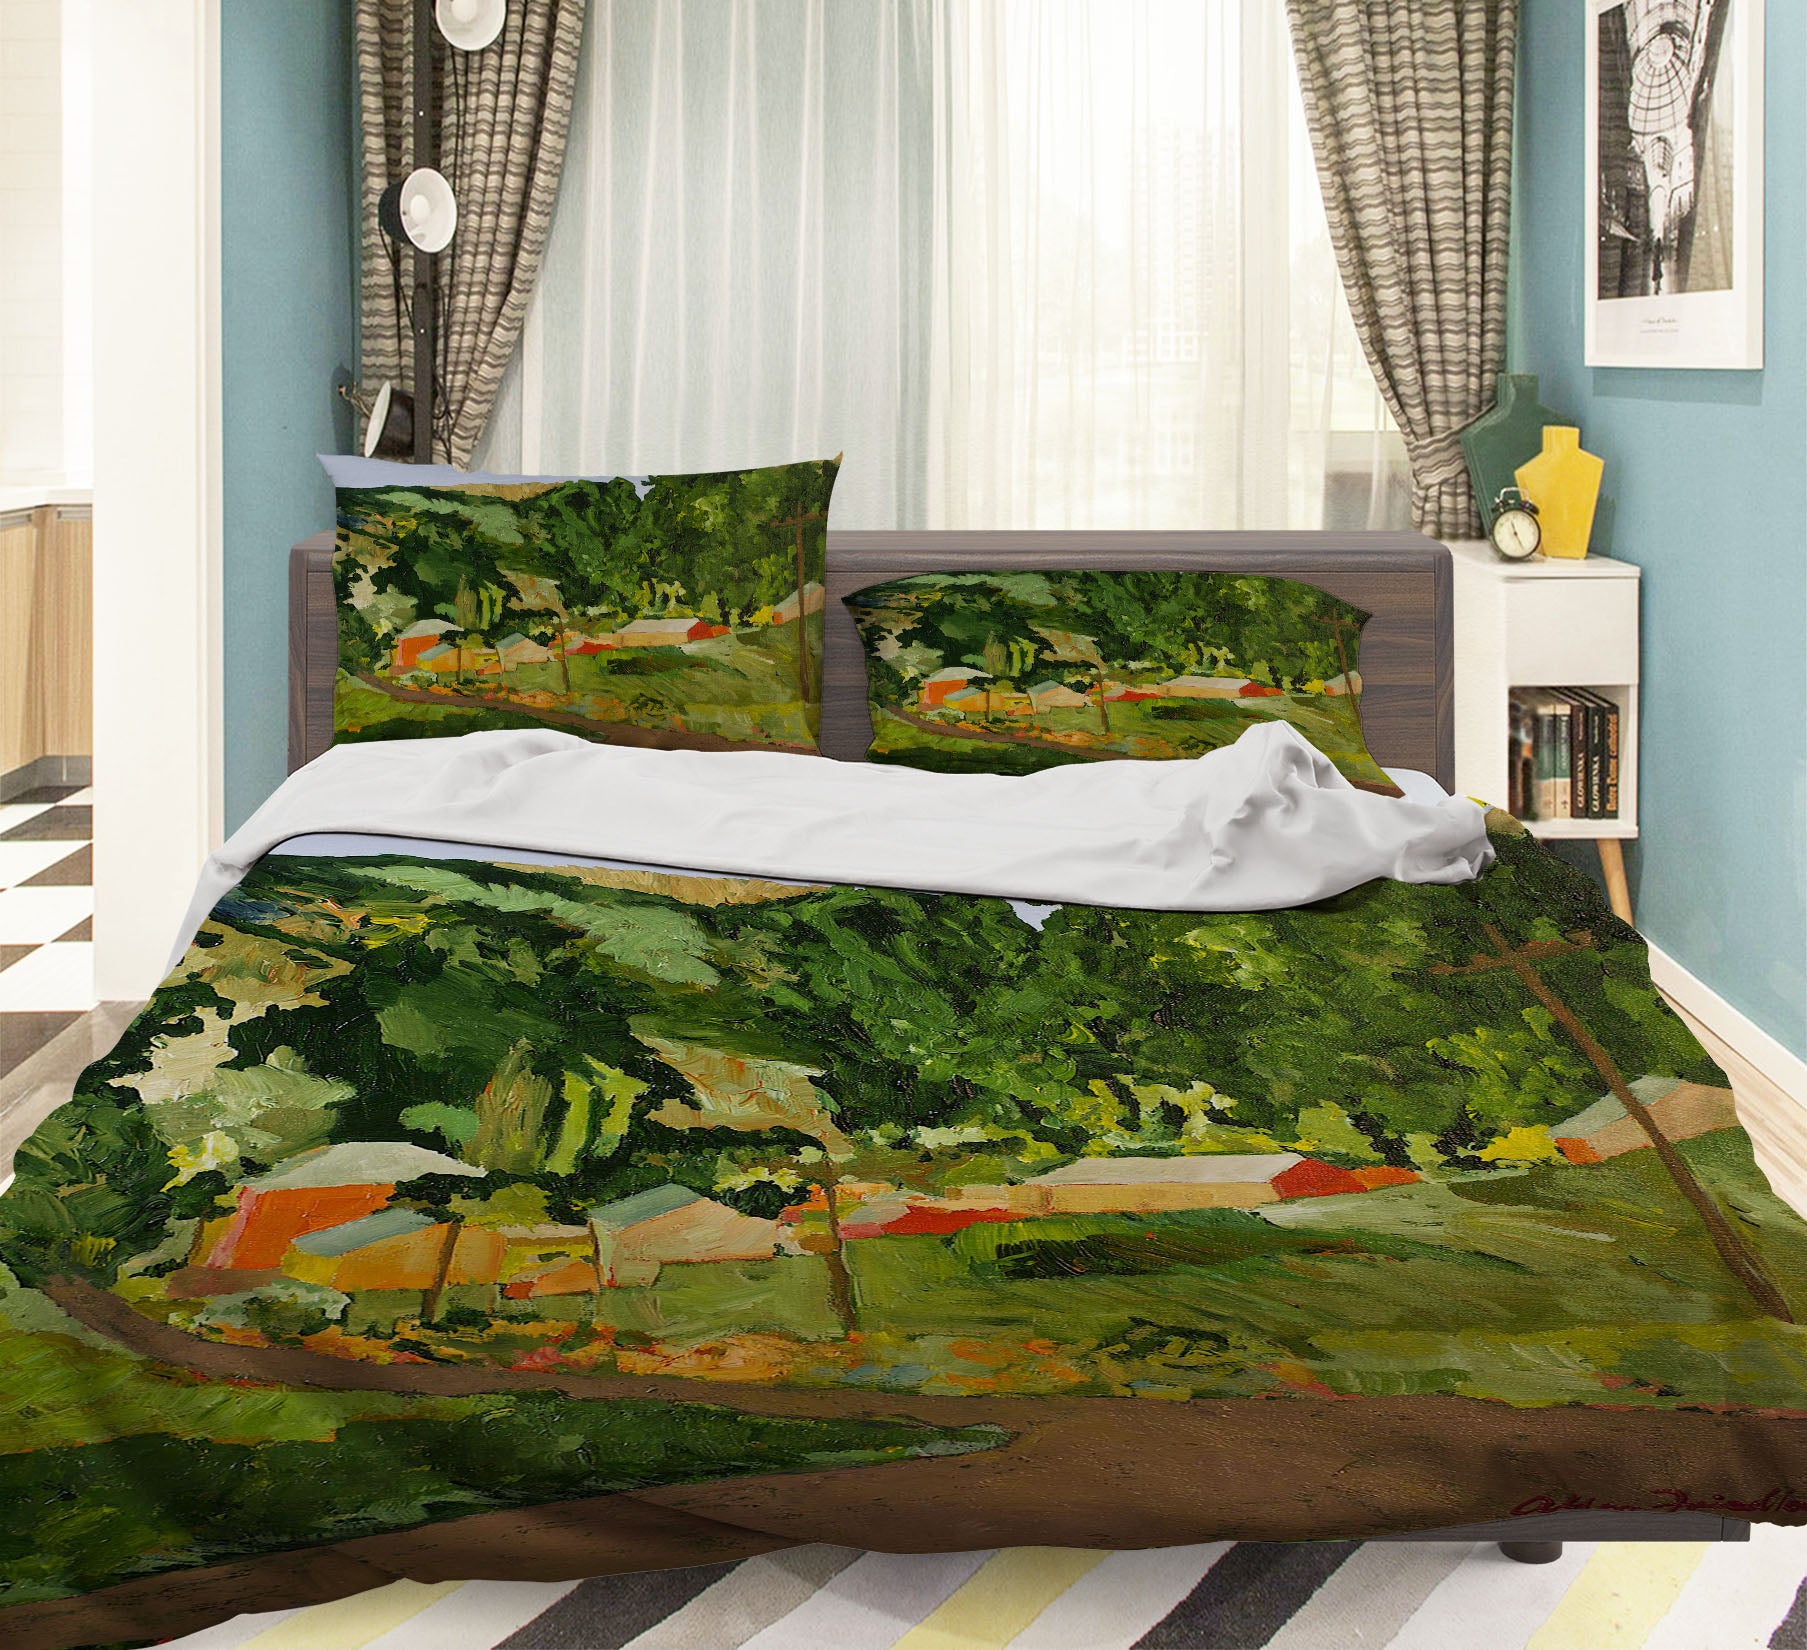 3D Forest House 1054 Allan P. Friedlander Bedding Bed Pillowcases Quilt